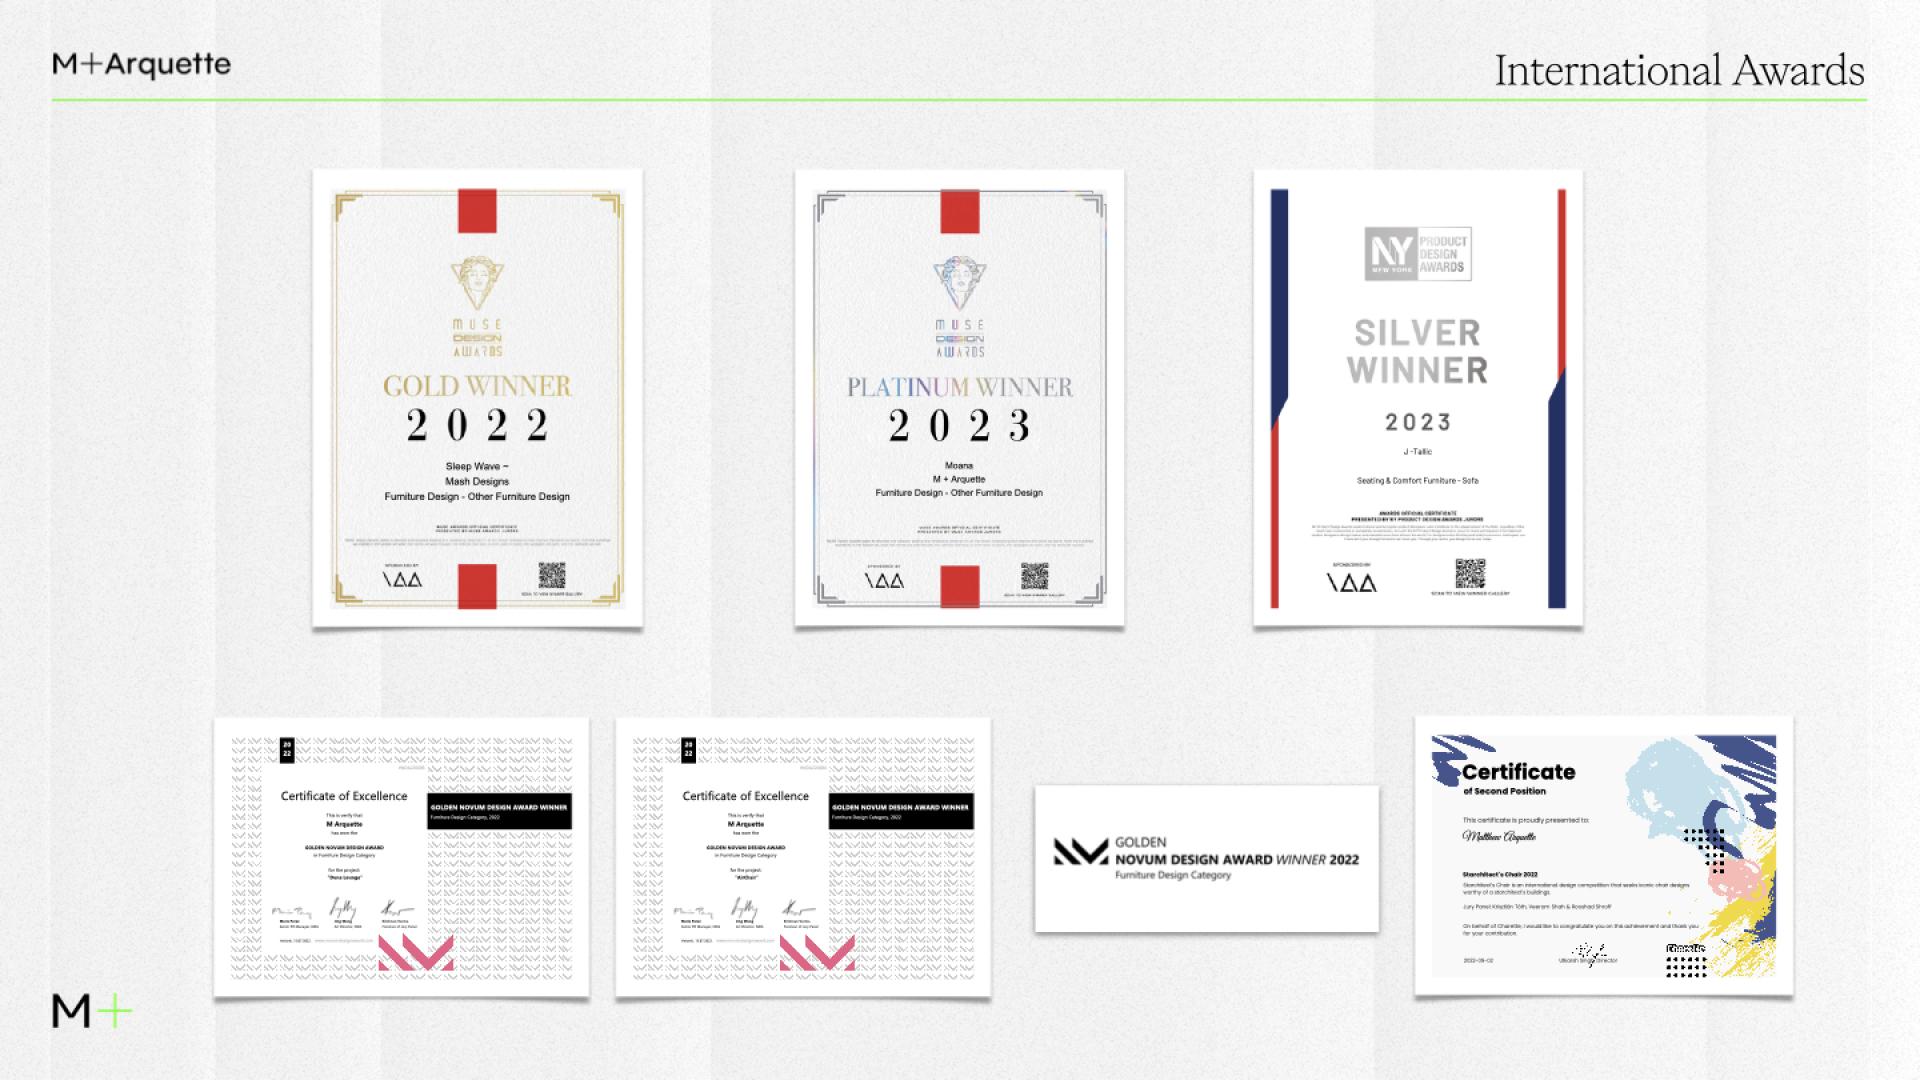 TBRA Brand Winner - Mash Designs Ltd. information 3